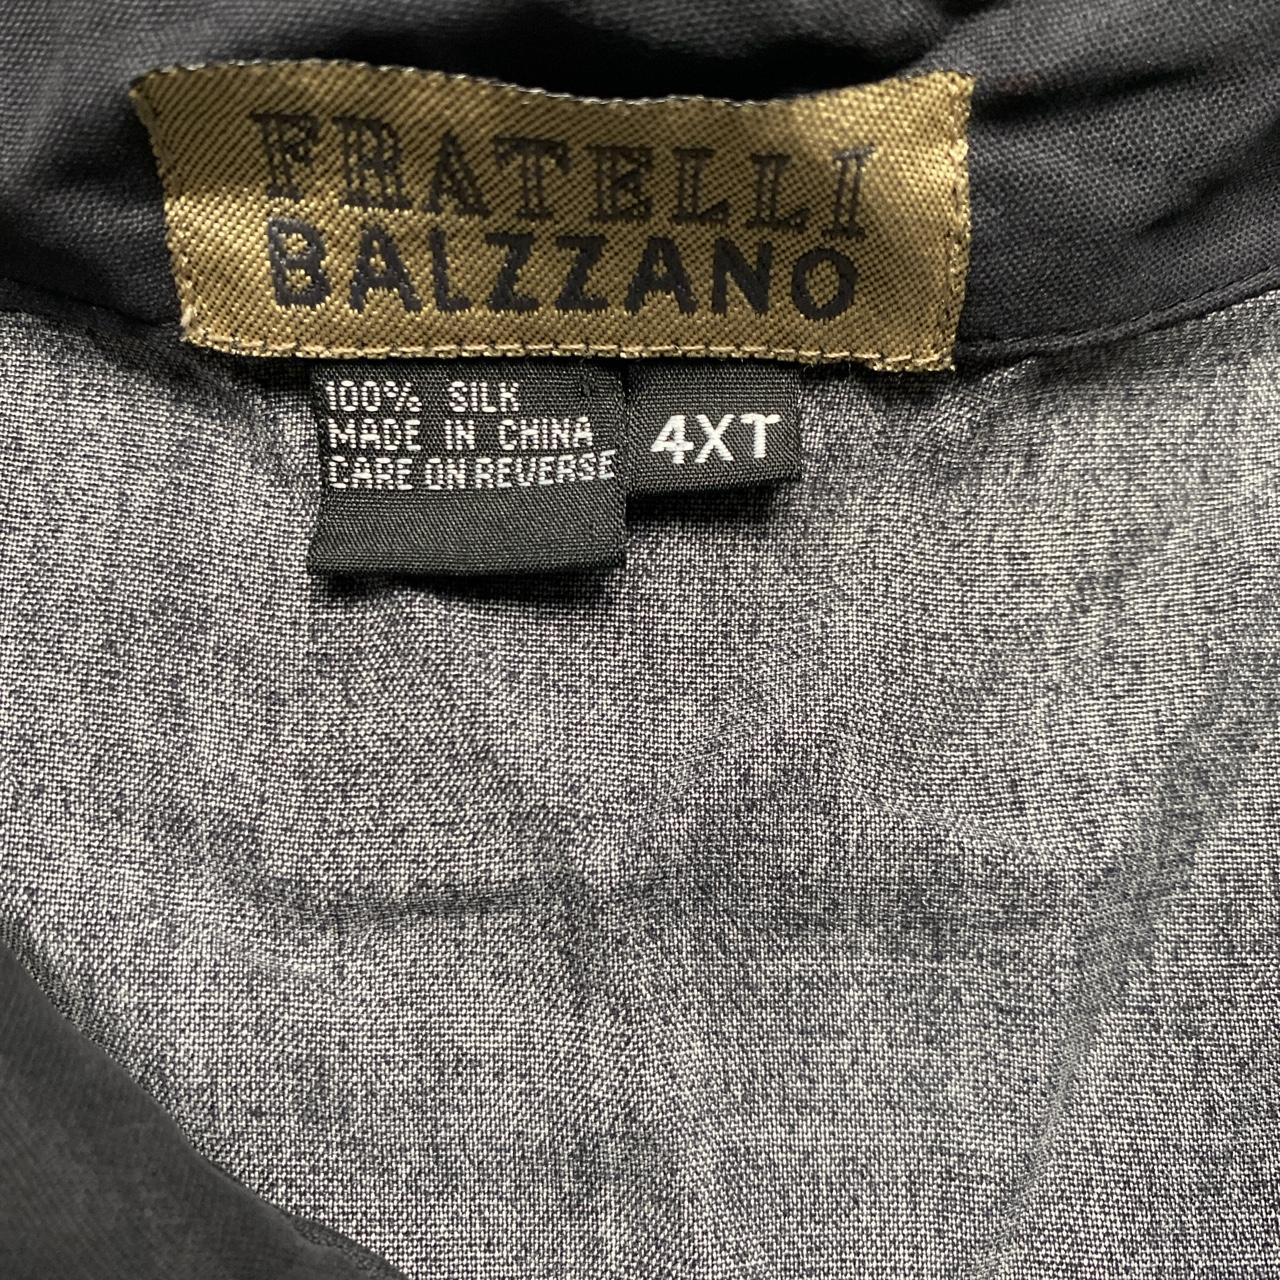 Fratelli Balzzano Martini Vintage 90’s Big Short Sleeve Shirt